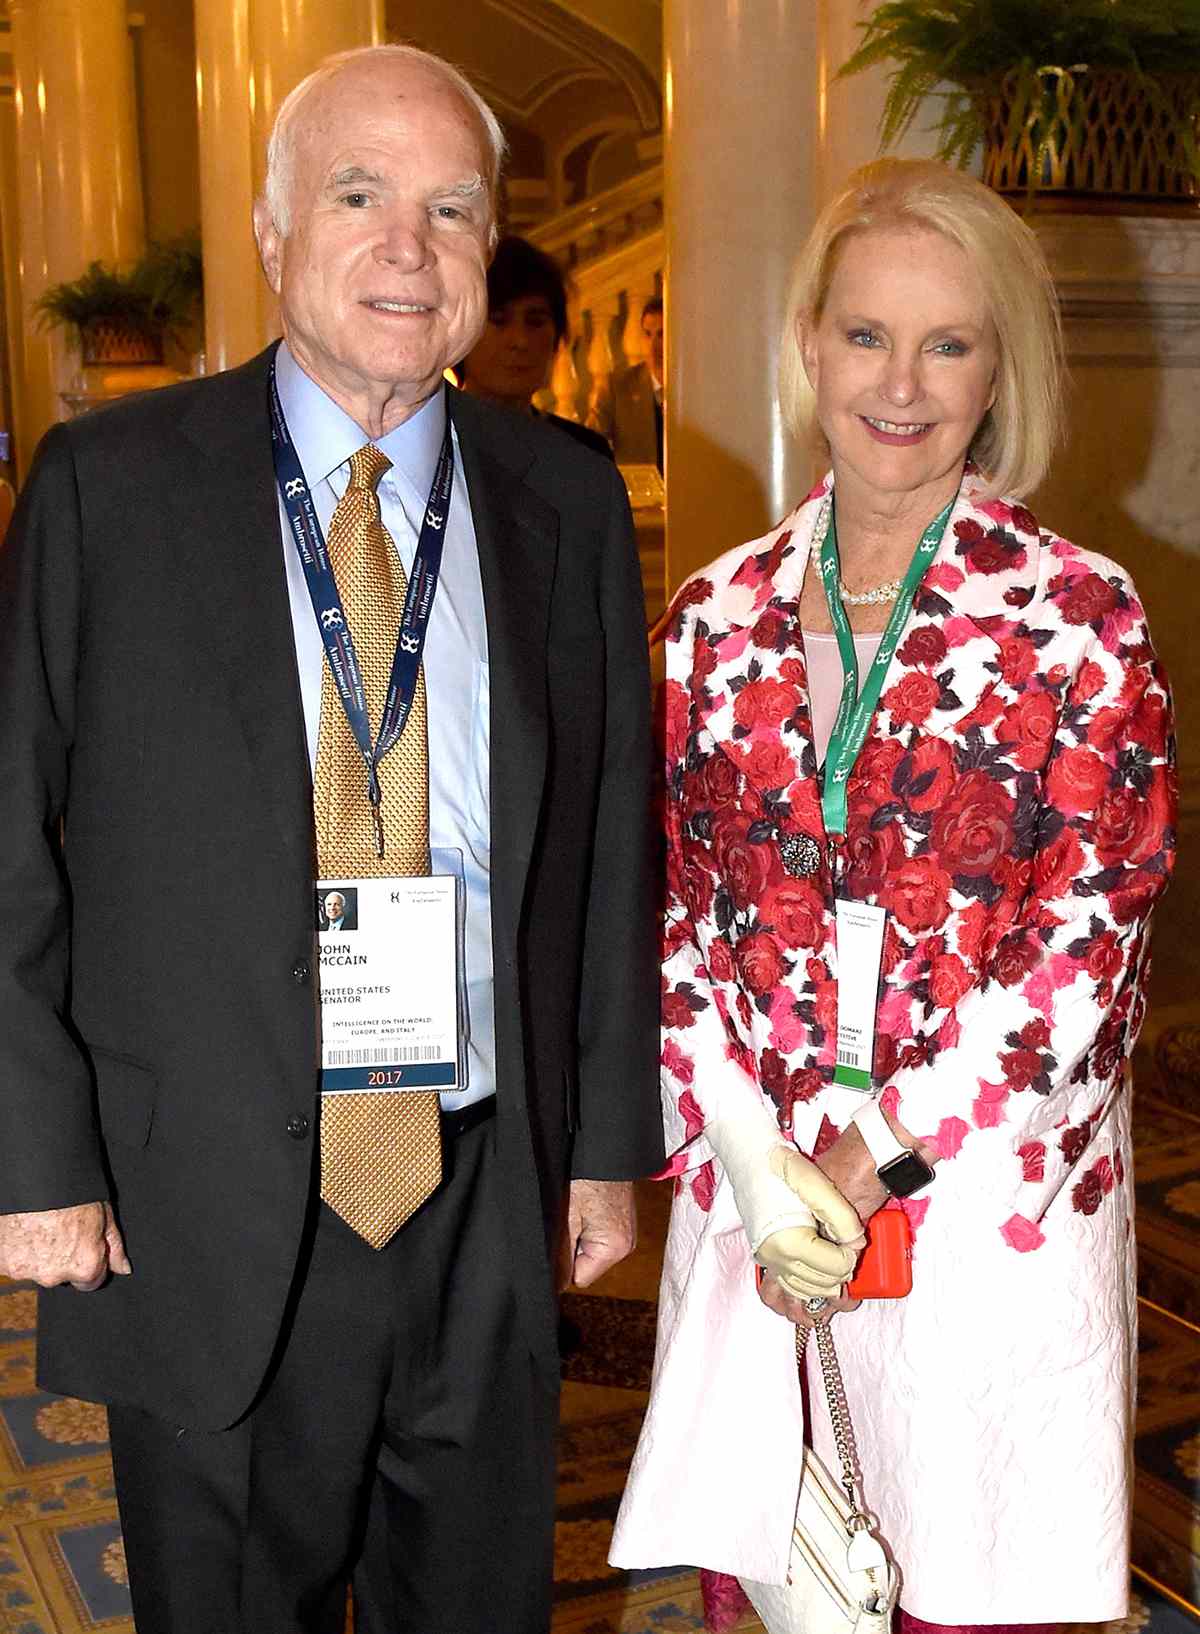 John McCain, United Senator from Arizona and his wife Cindy